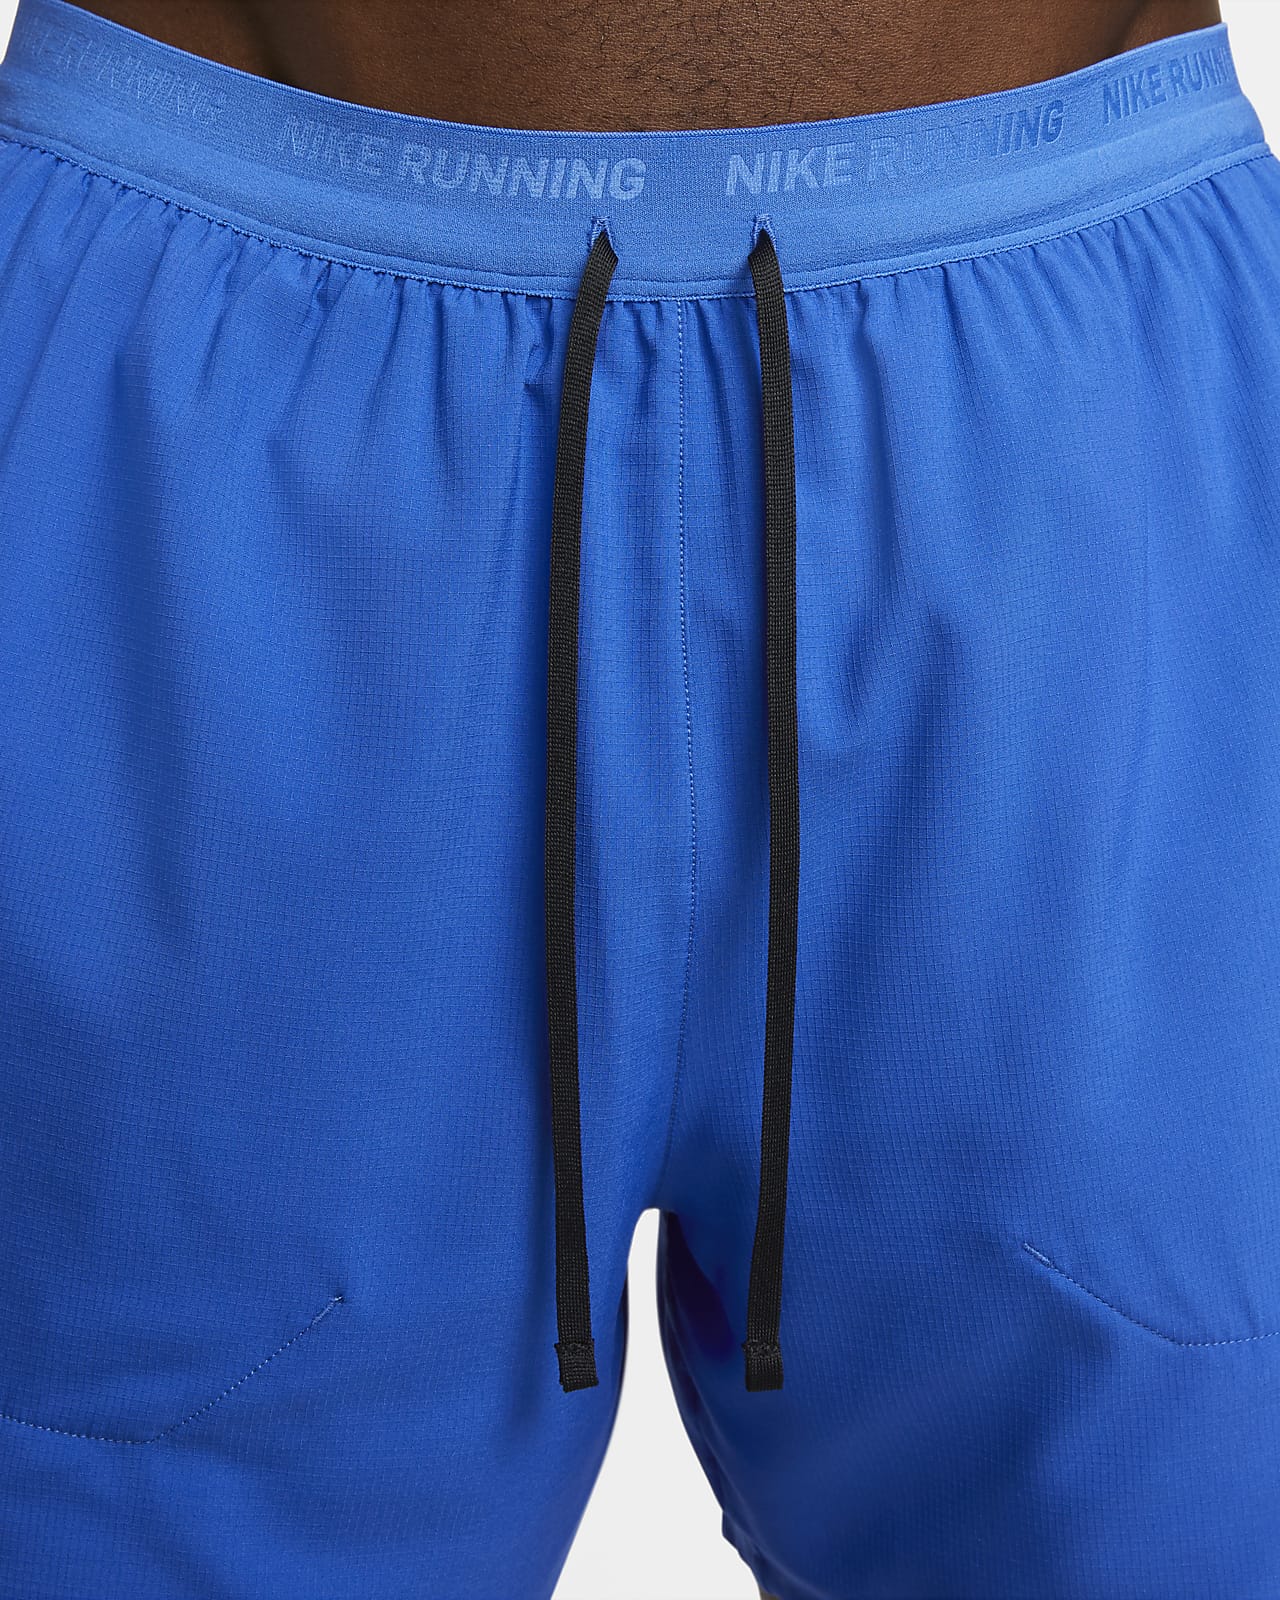 nike men's shorts with built in underwear